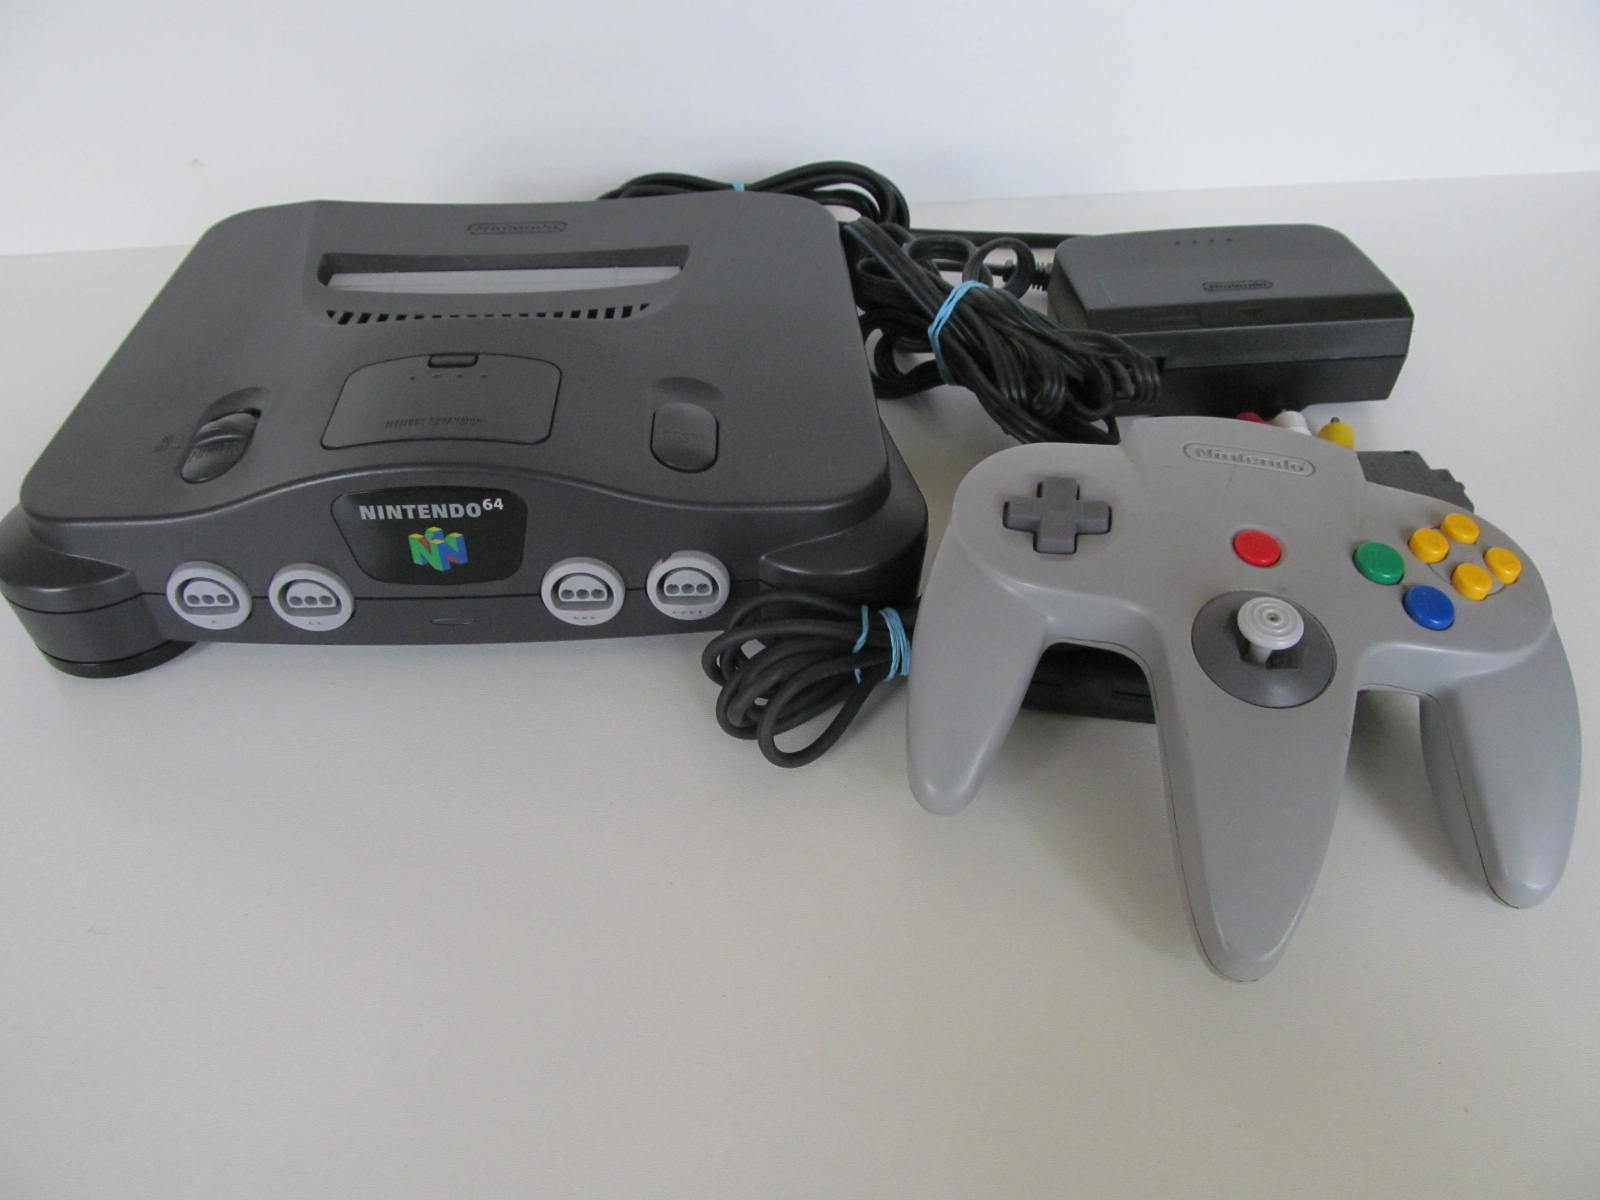 Nintendo 64 Consoles Unboxed